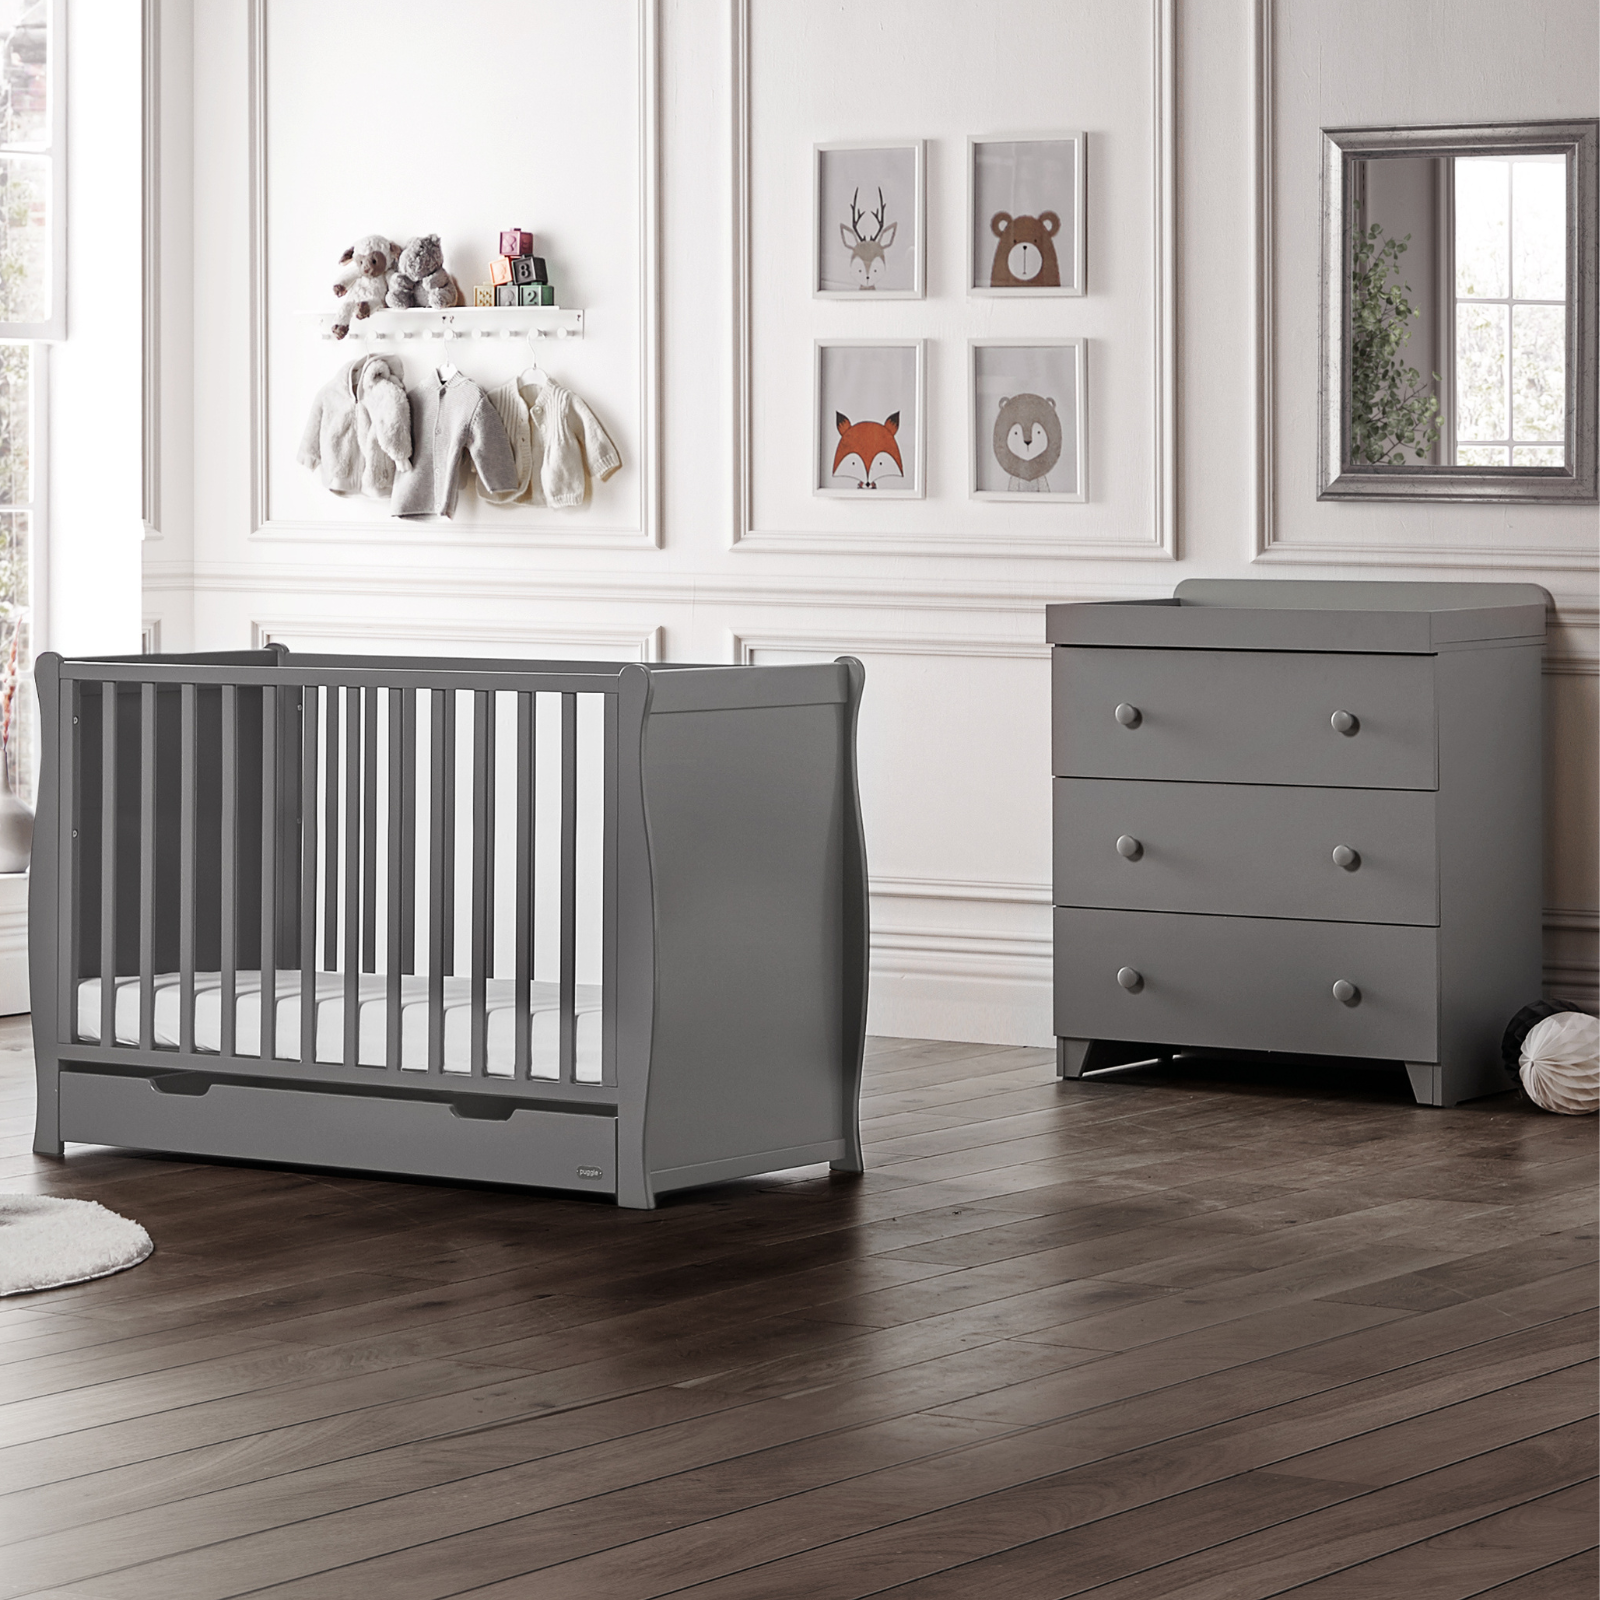 Puggle Chelford Sleigh Cot 4 Piece Nursery Furniture Set - Classic Grey